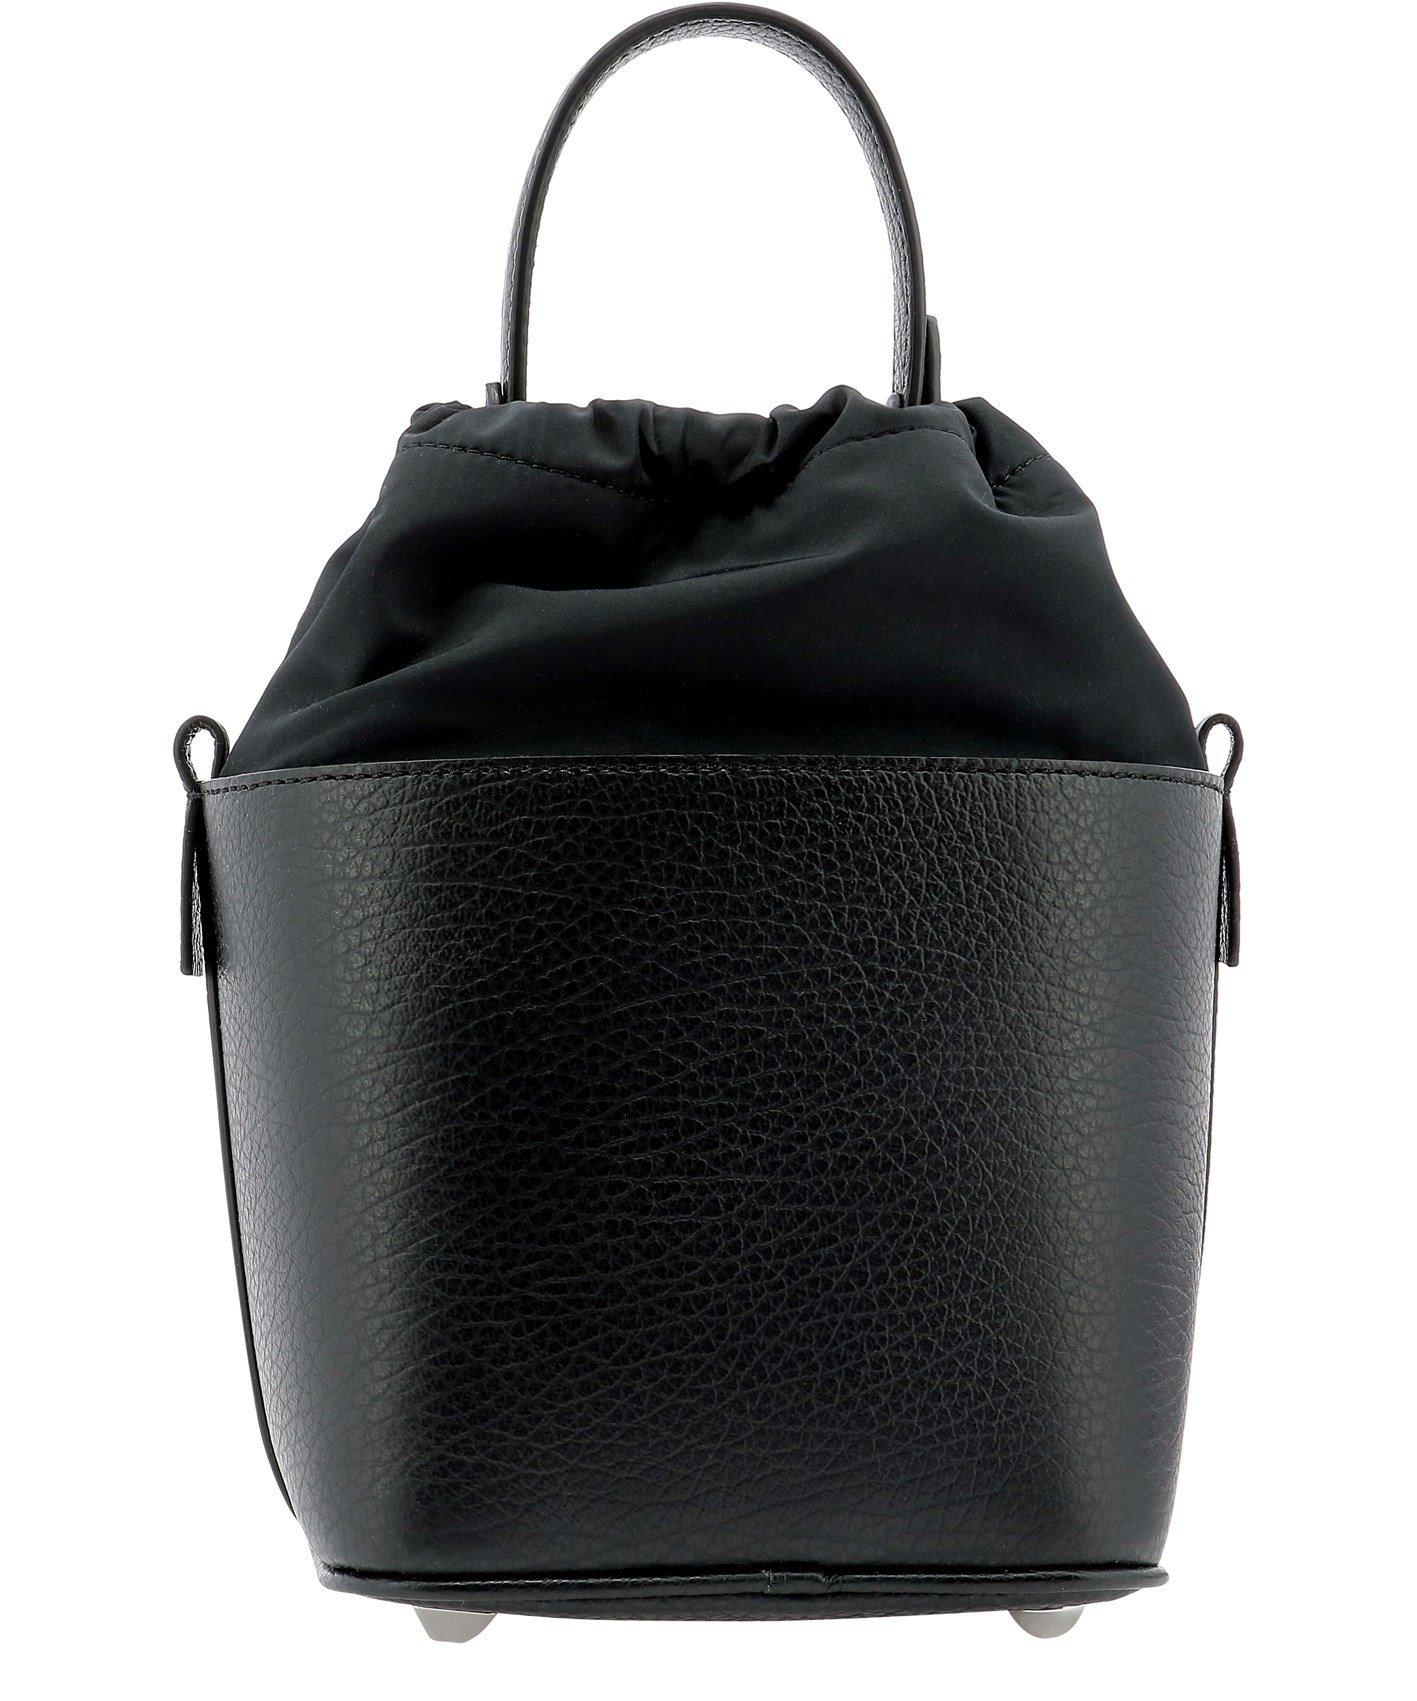 Maison Margiela 5ac Grained-leather Bucket Bag in Black - Lyst